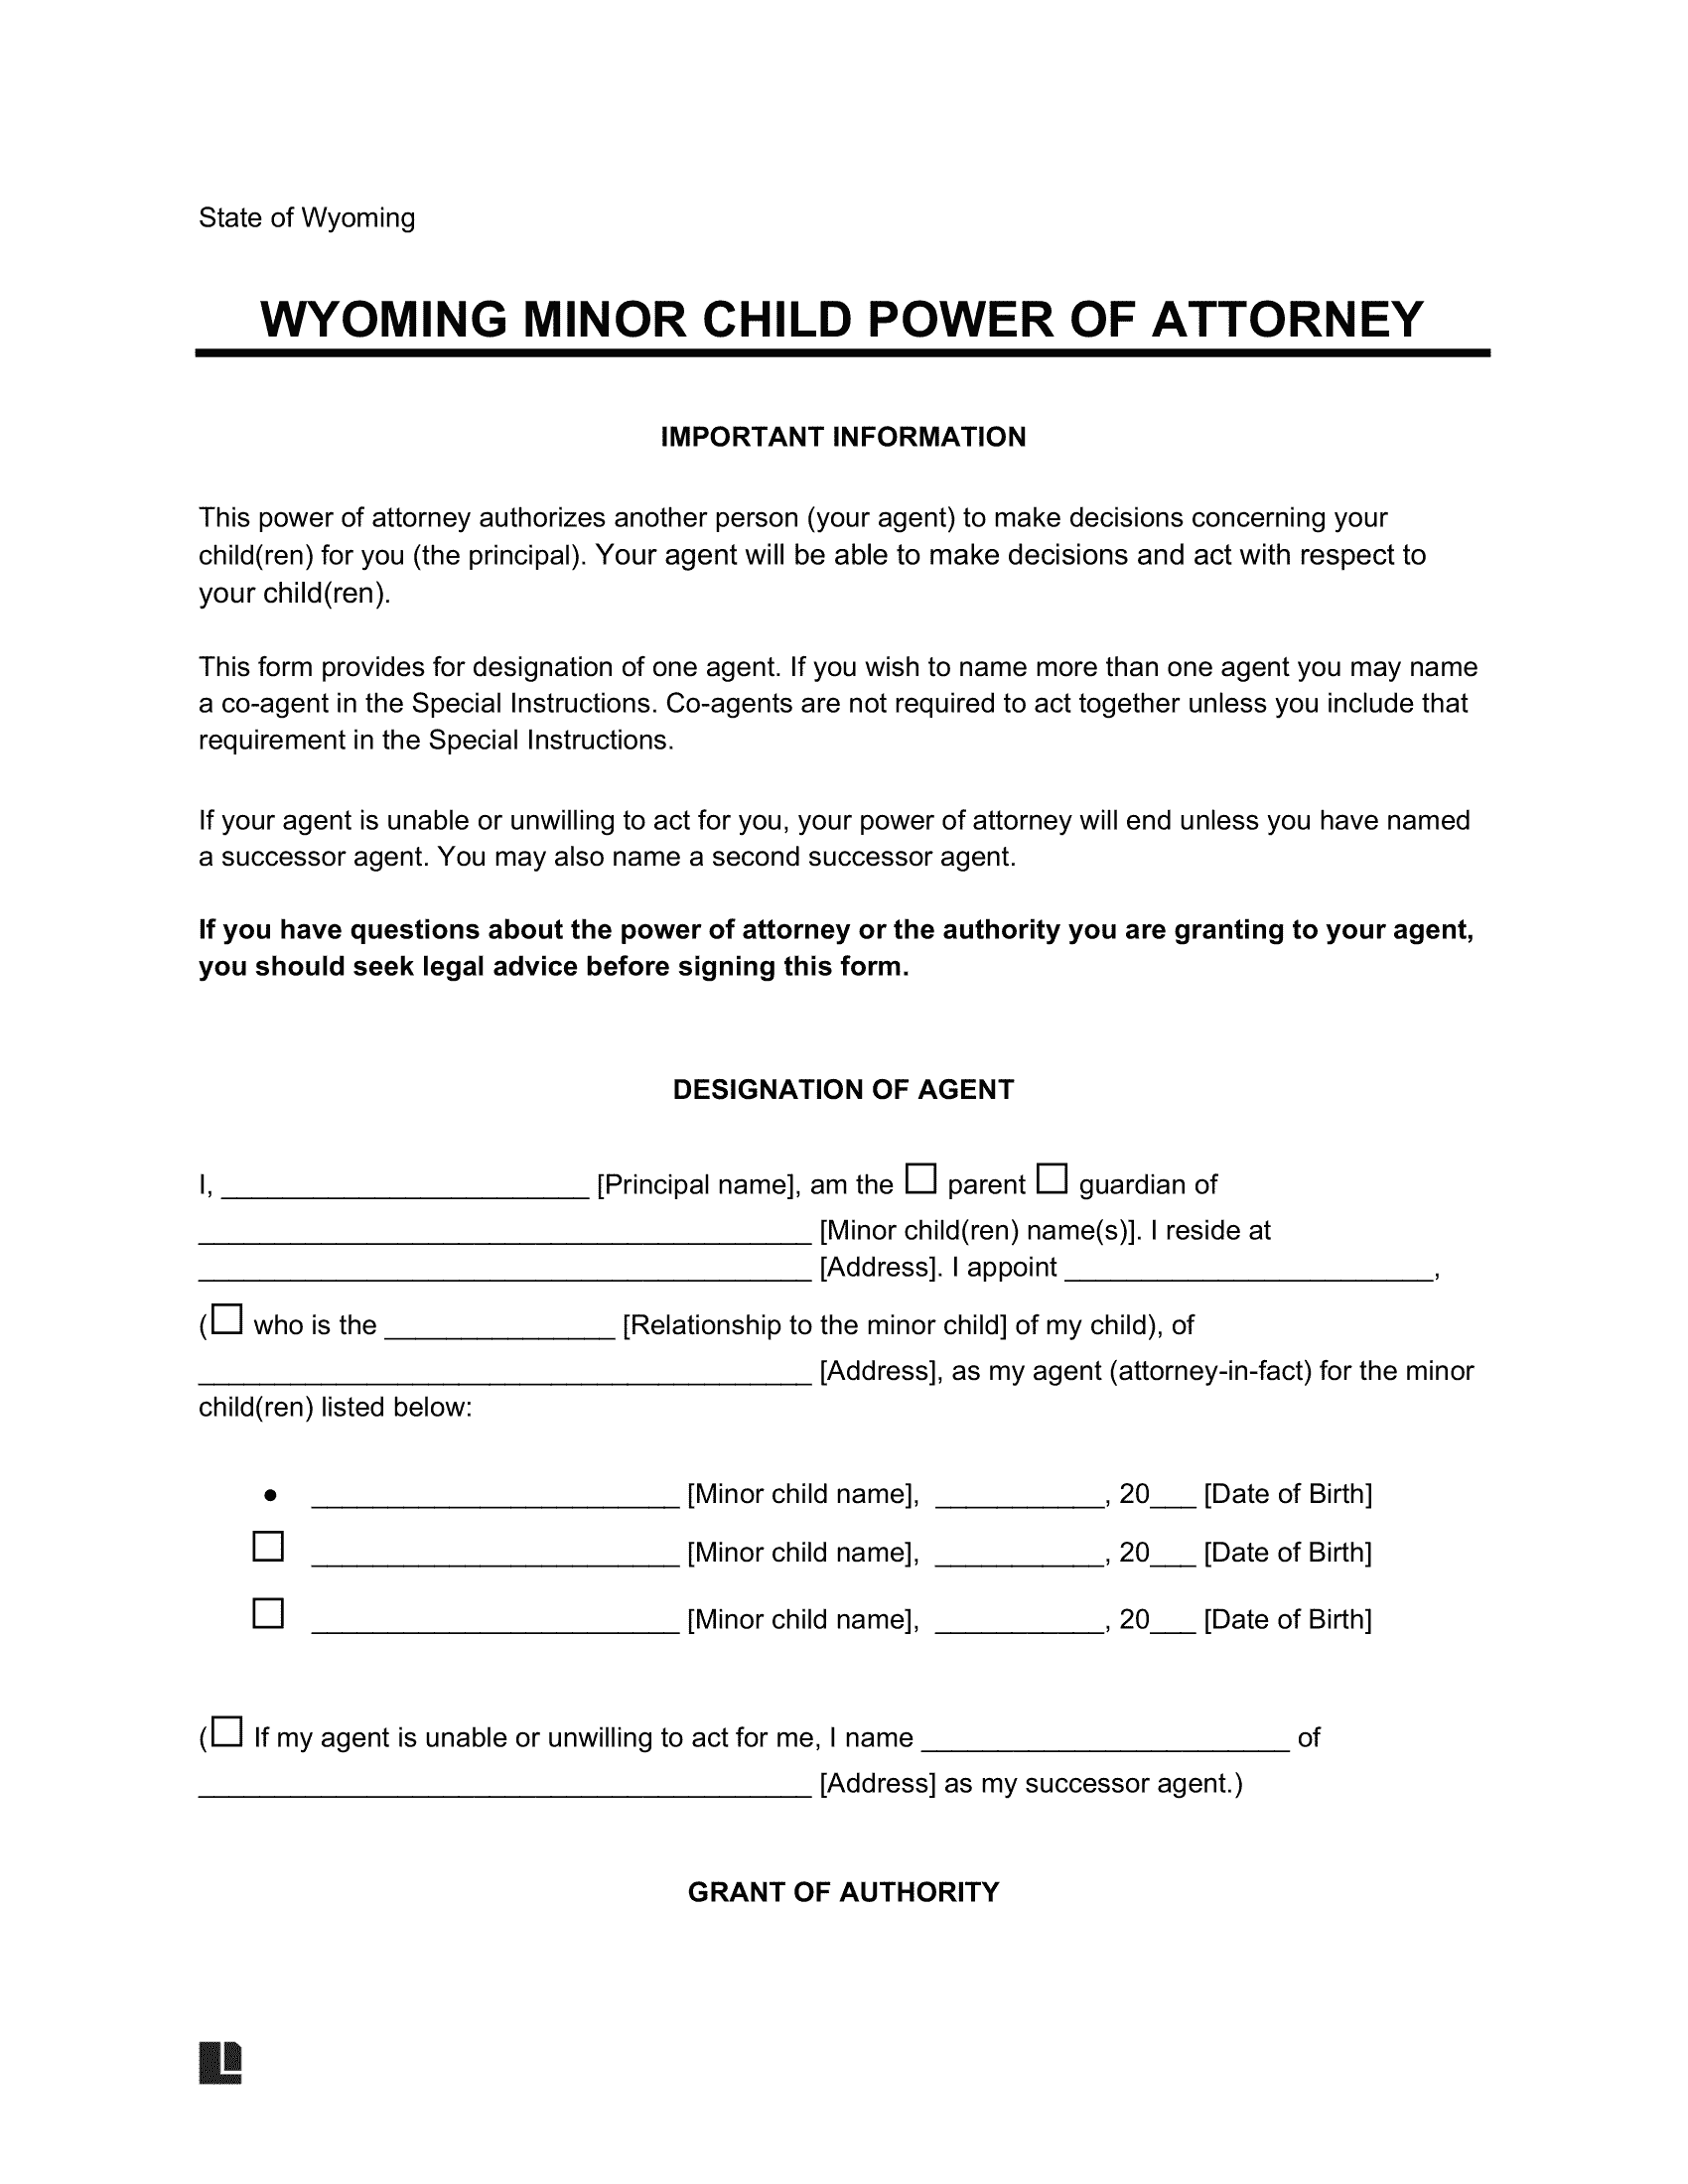 Wyoming Minor Child Power of Attorney Form